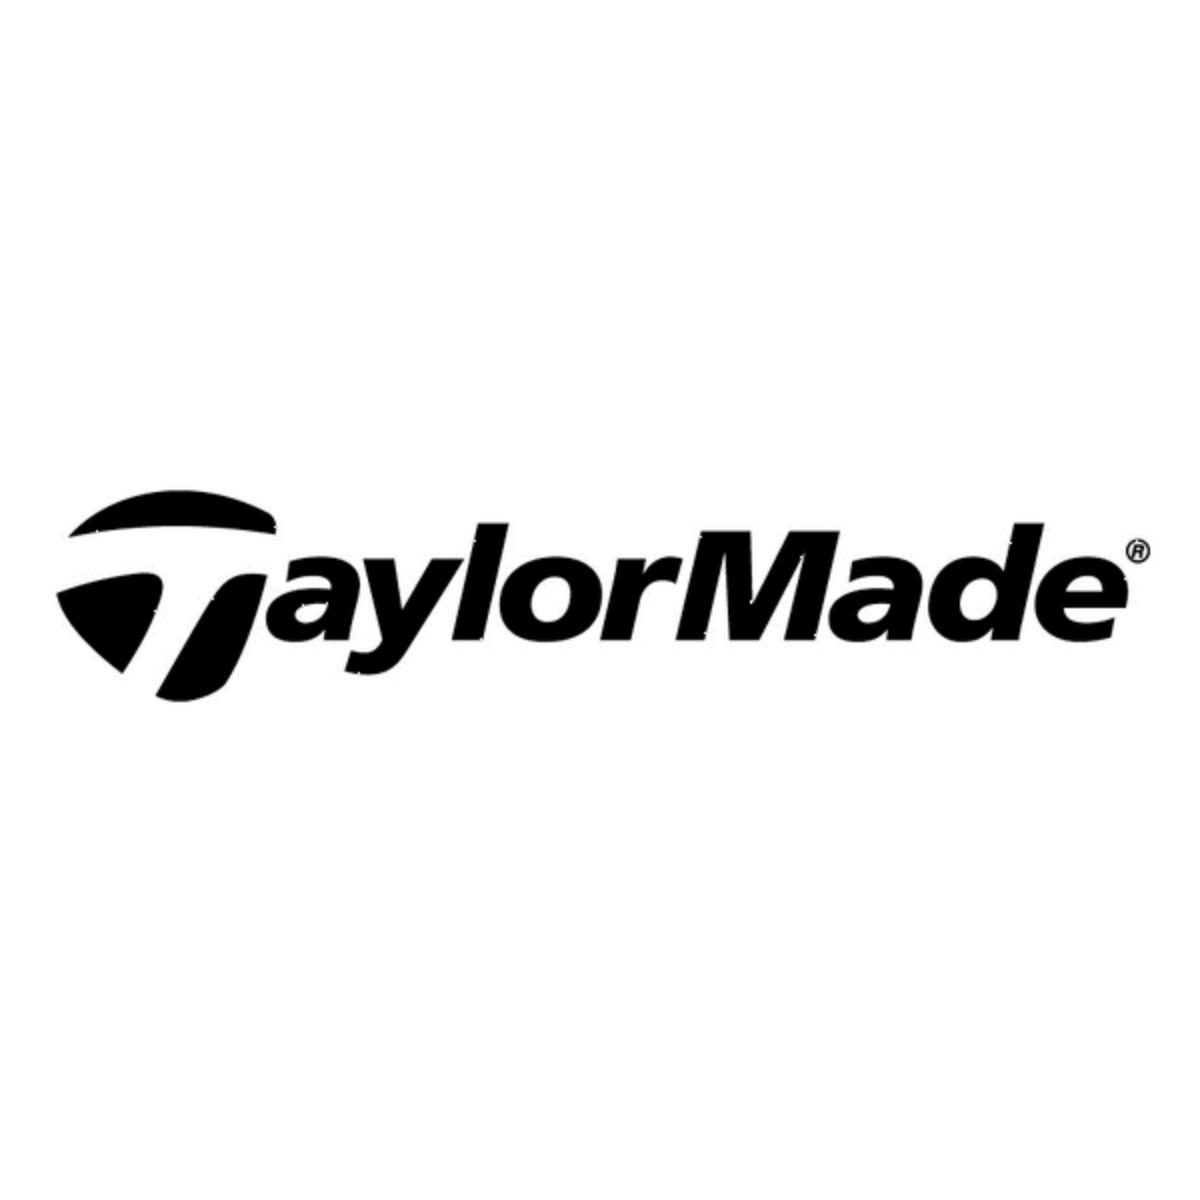 Taylormade - Golf Store UK